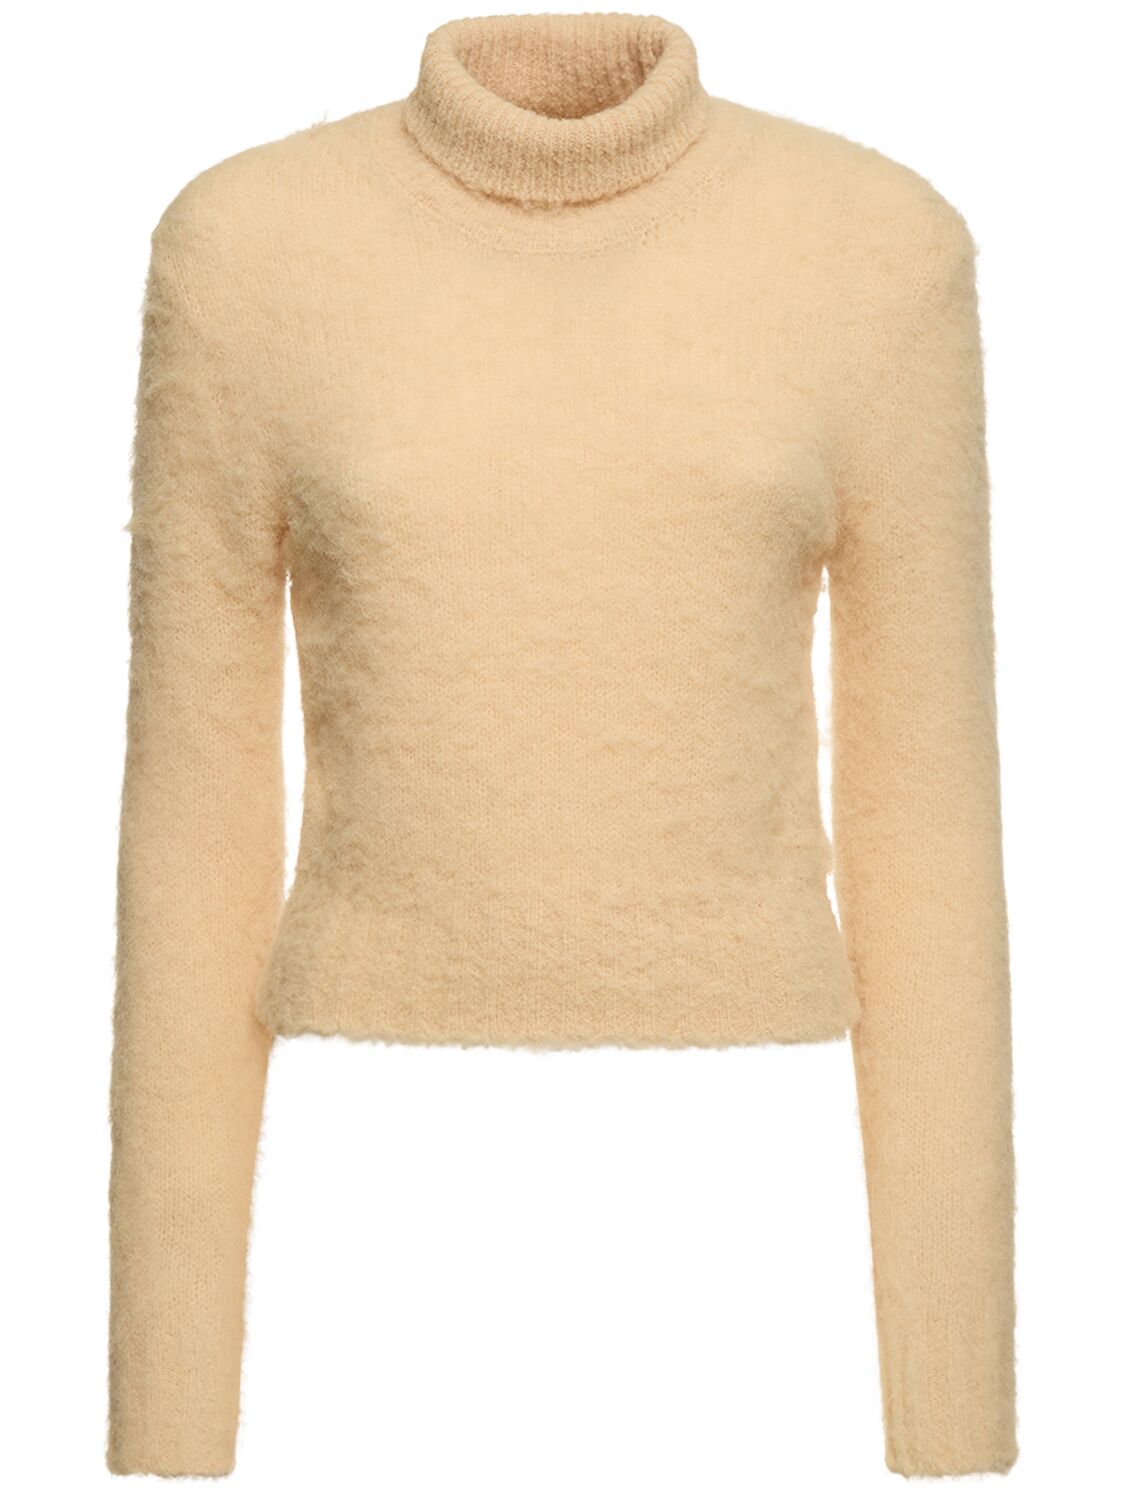 Image of Brushed Alpaca Blend Turtleneck Sweater